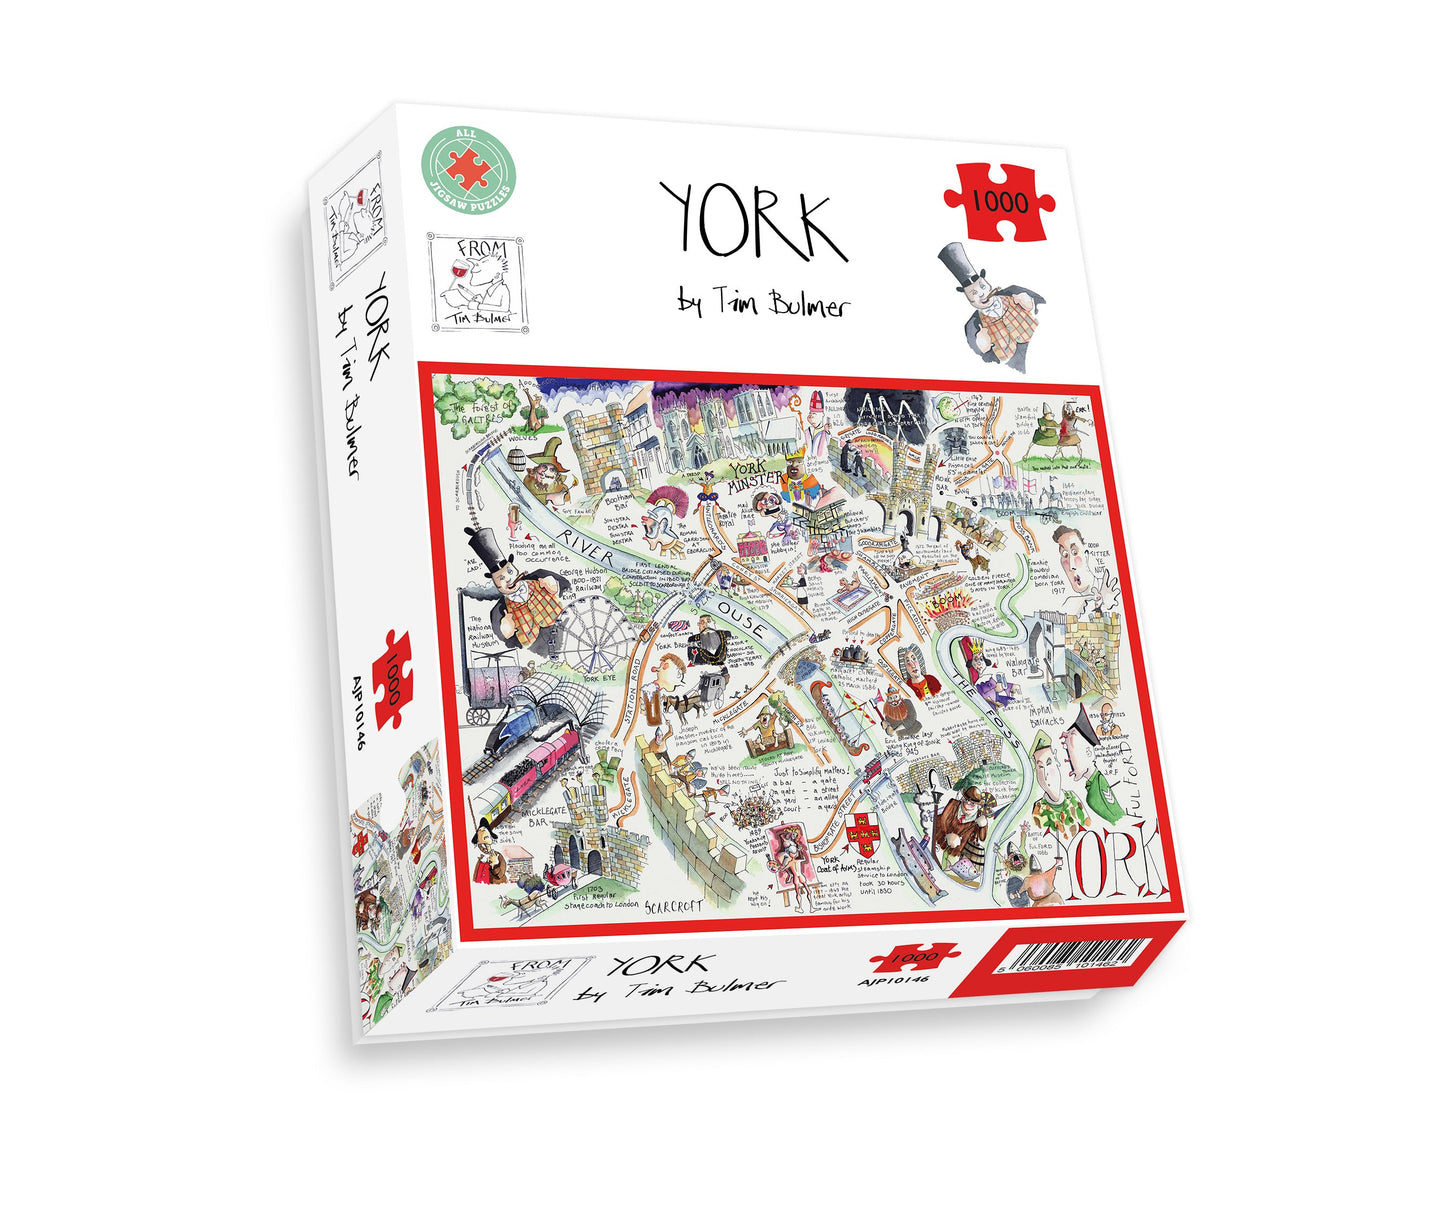 York - Tim Bulmer 1000 Piece Jigsaw Puzzle box